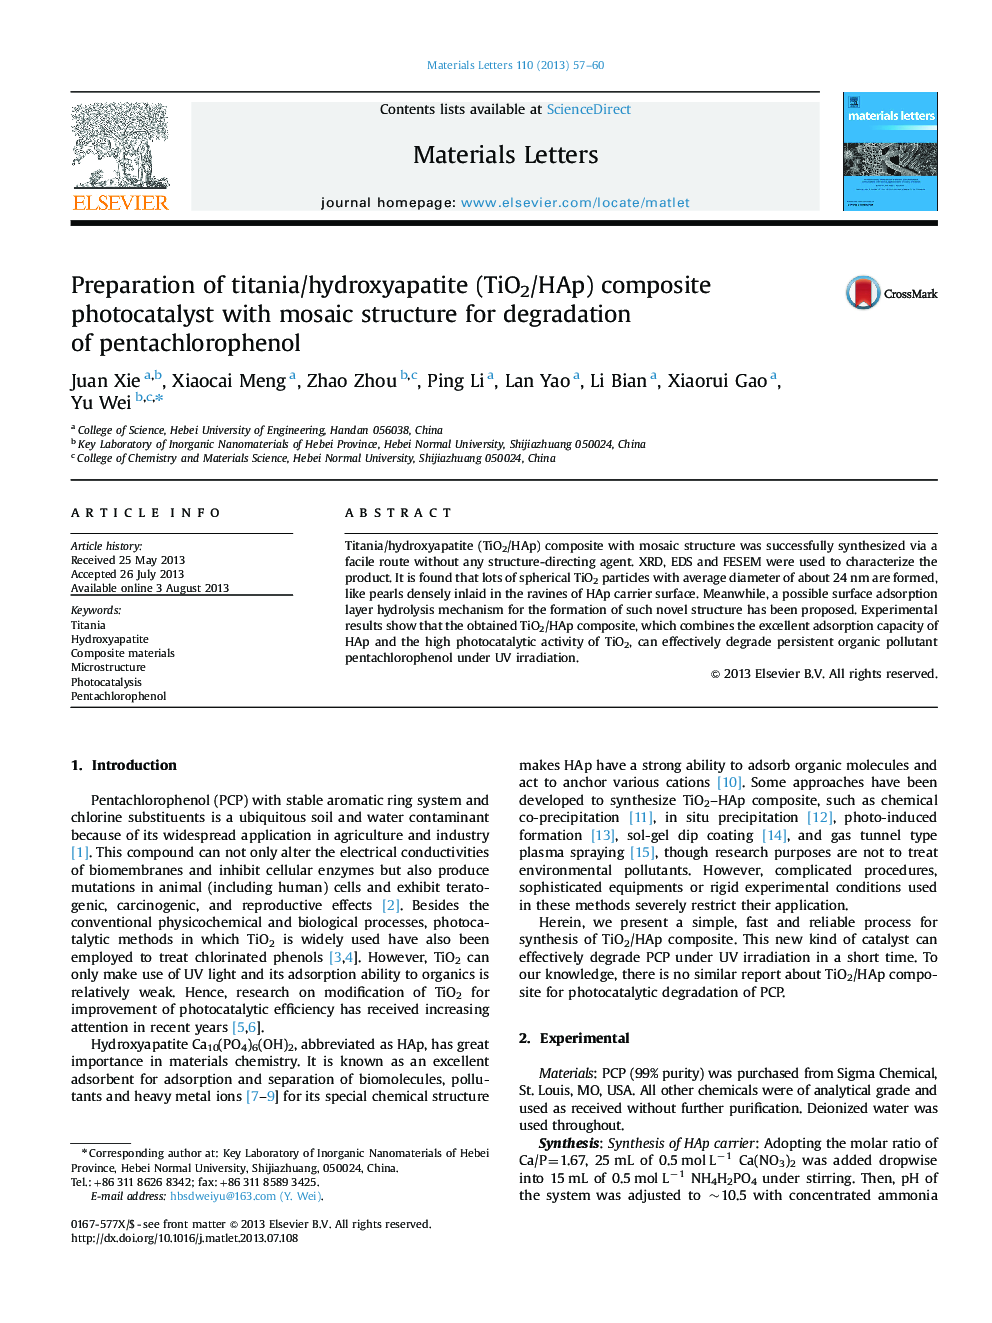 Preparation of titania/hydroxyapatite (TiO2/HAp) composite photocatalyst with mosaic structure for degradation of pentachlorophenol